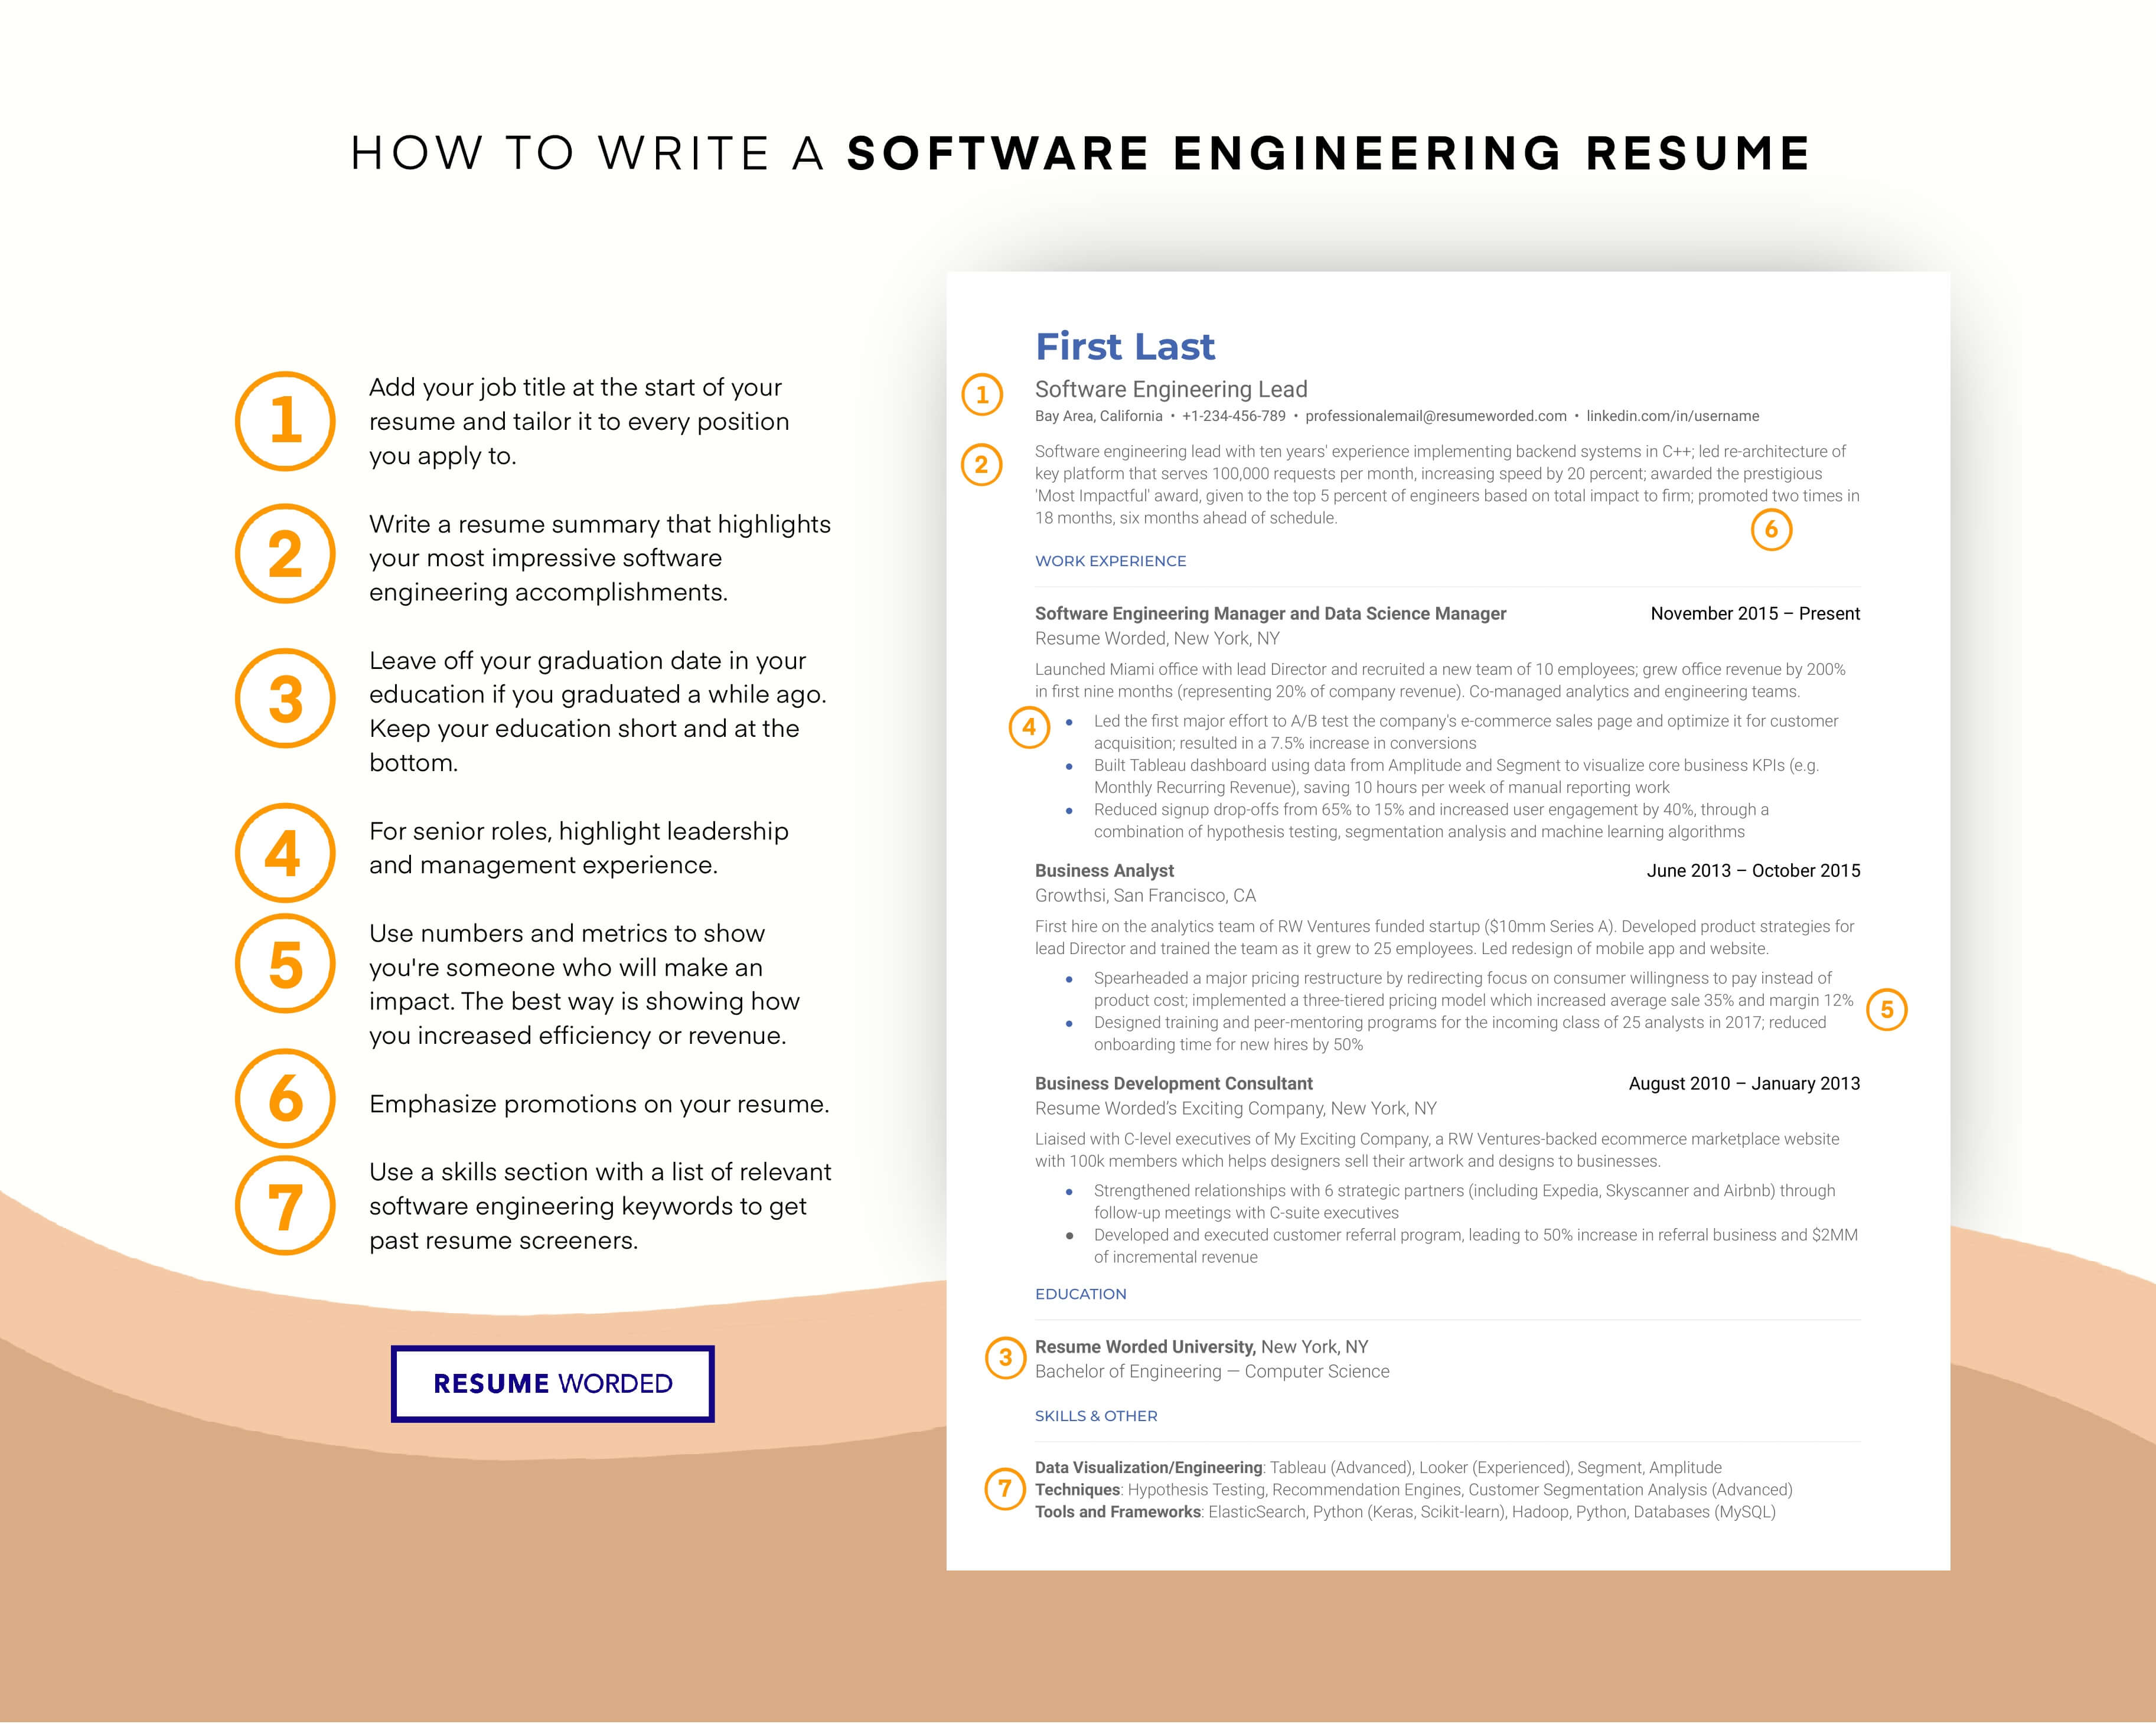 Use programming-specific keywords. - Junior Software Developer Resume